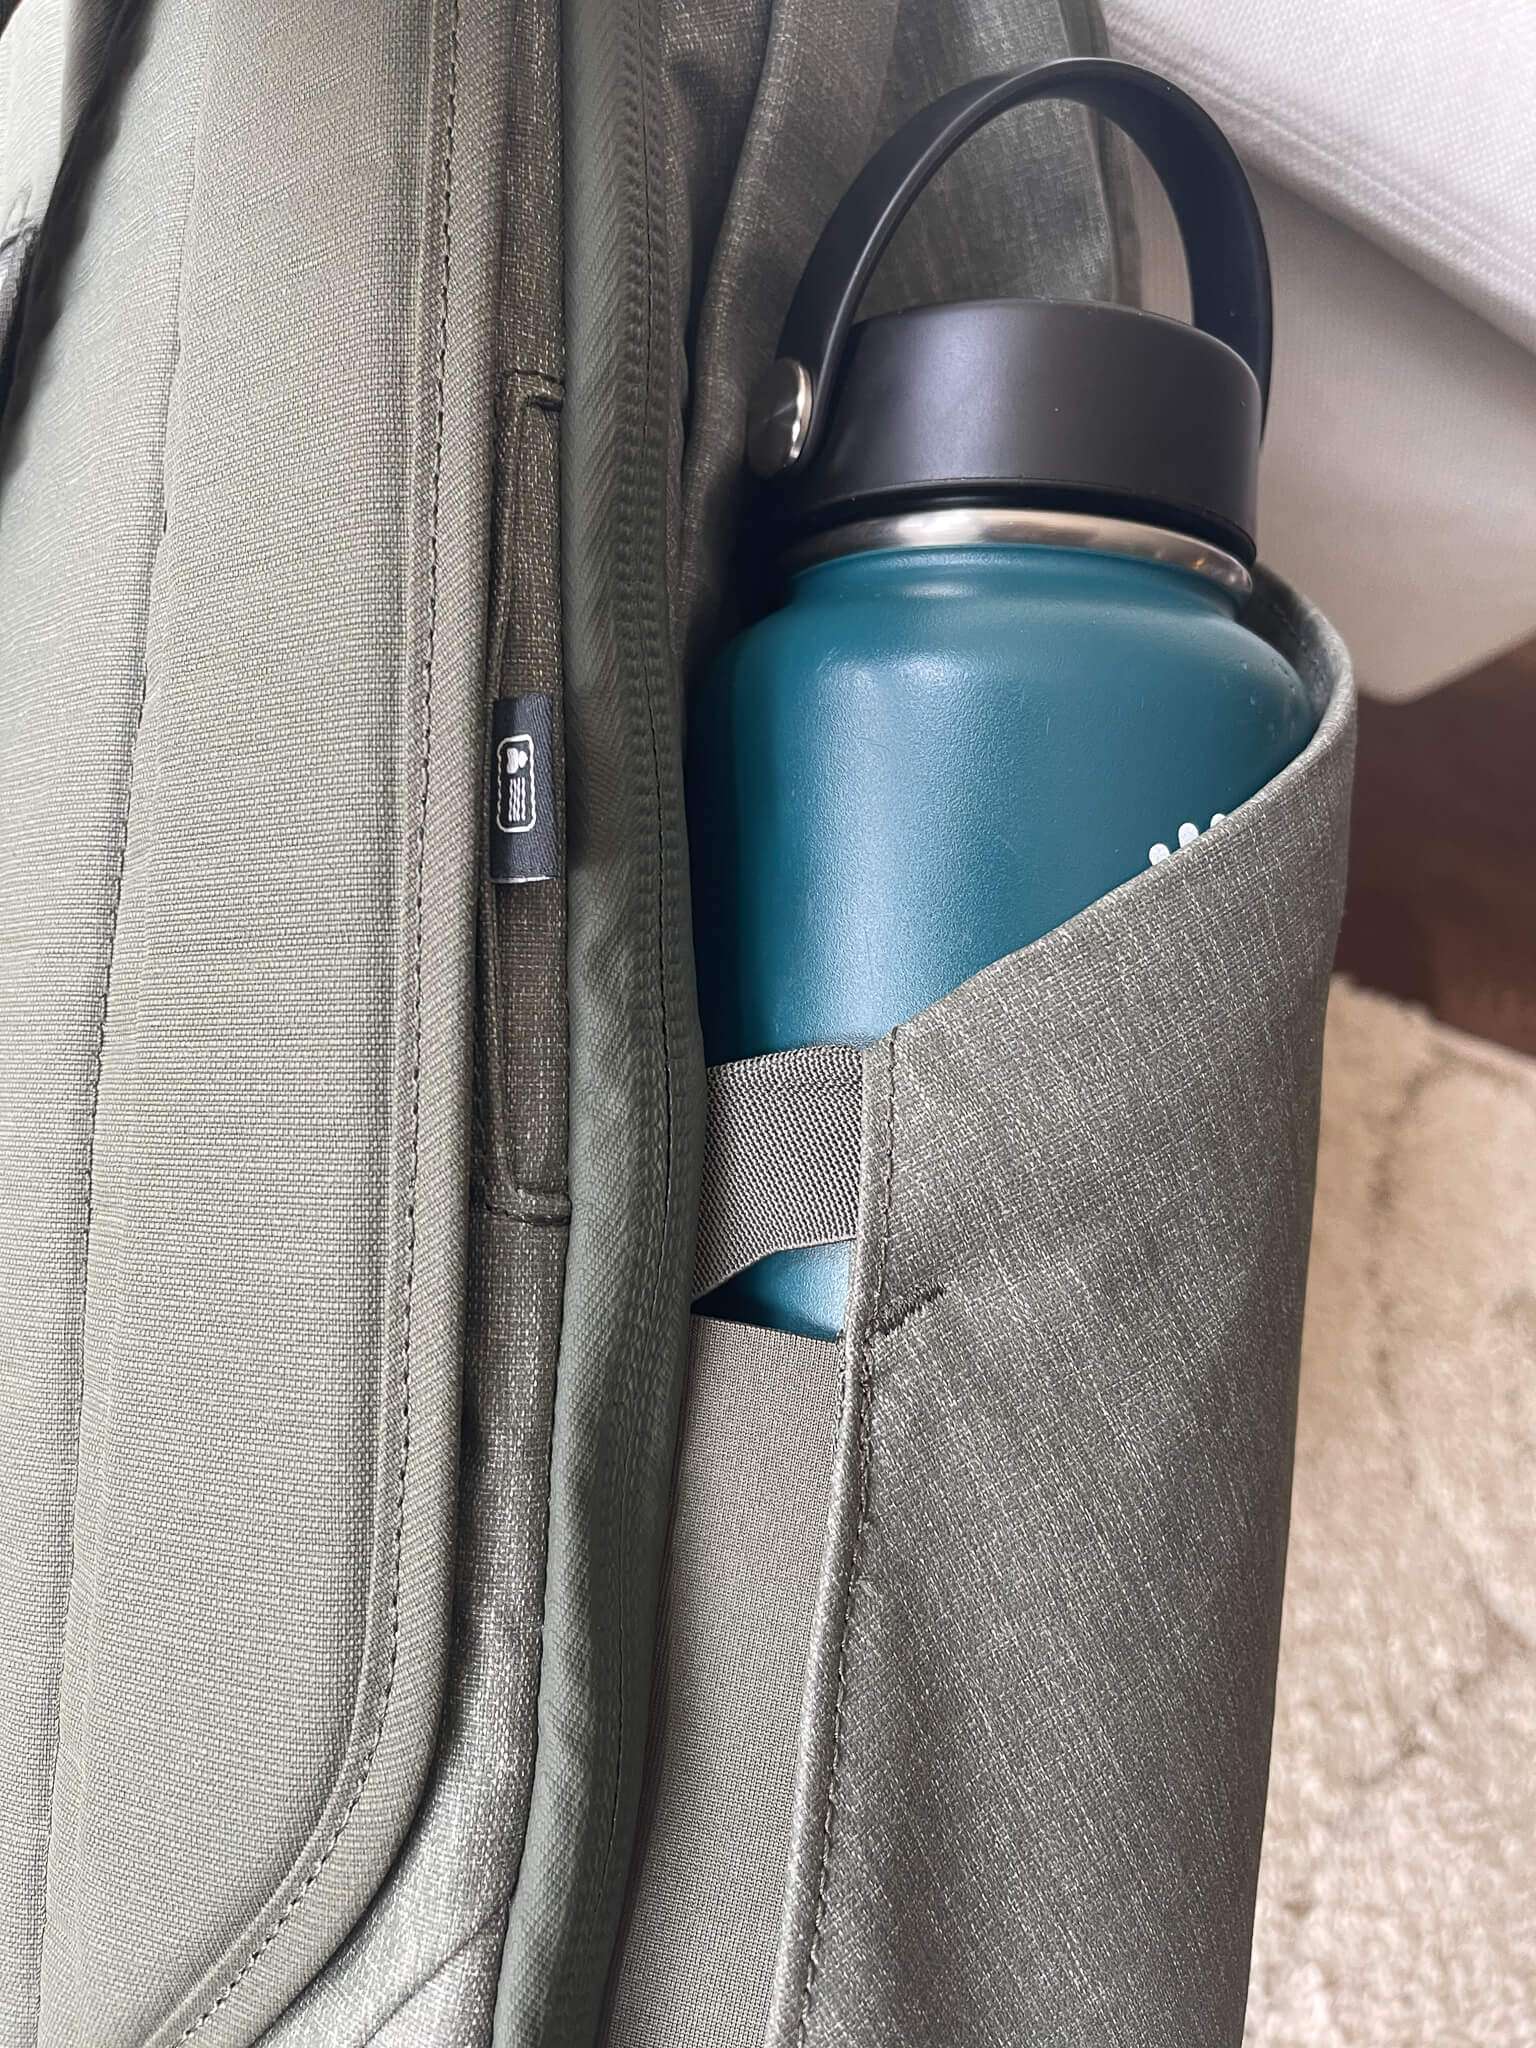 Peak Design Travel Backpack water bottle holder